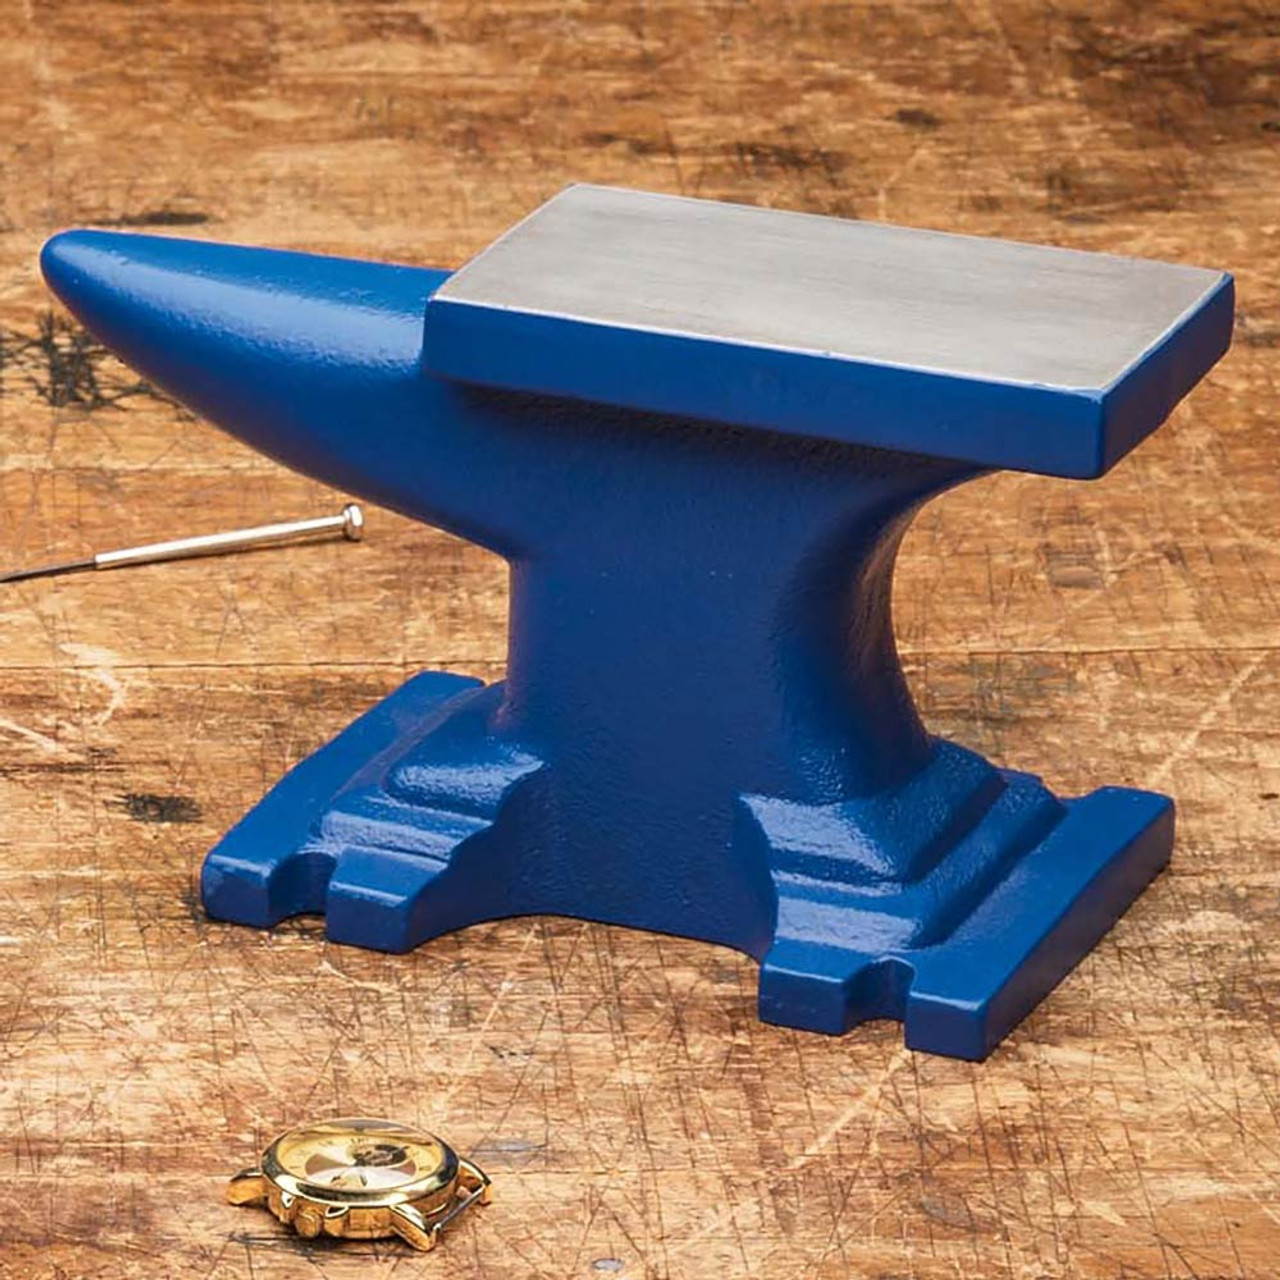 HimaPro himapro single horn anvil for blacksmith blue - 11 lbs